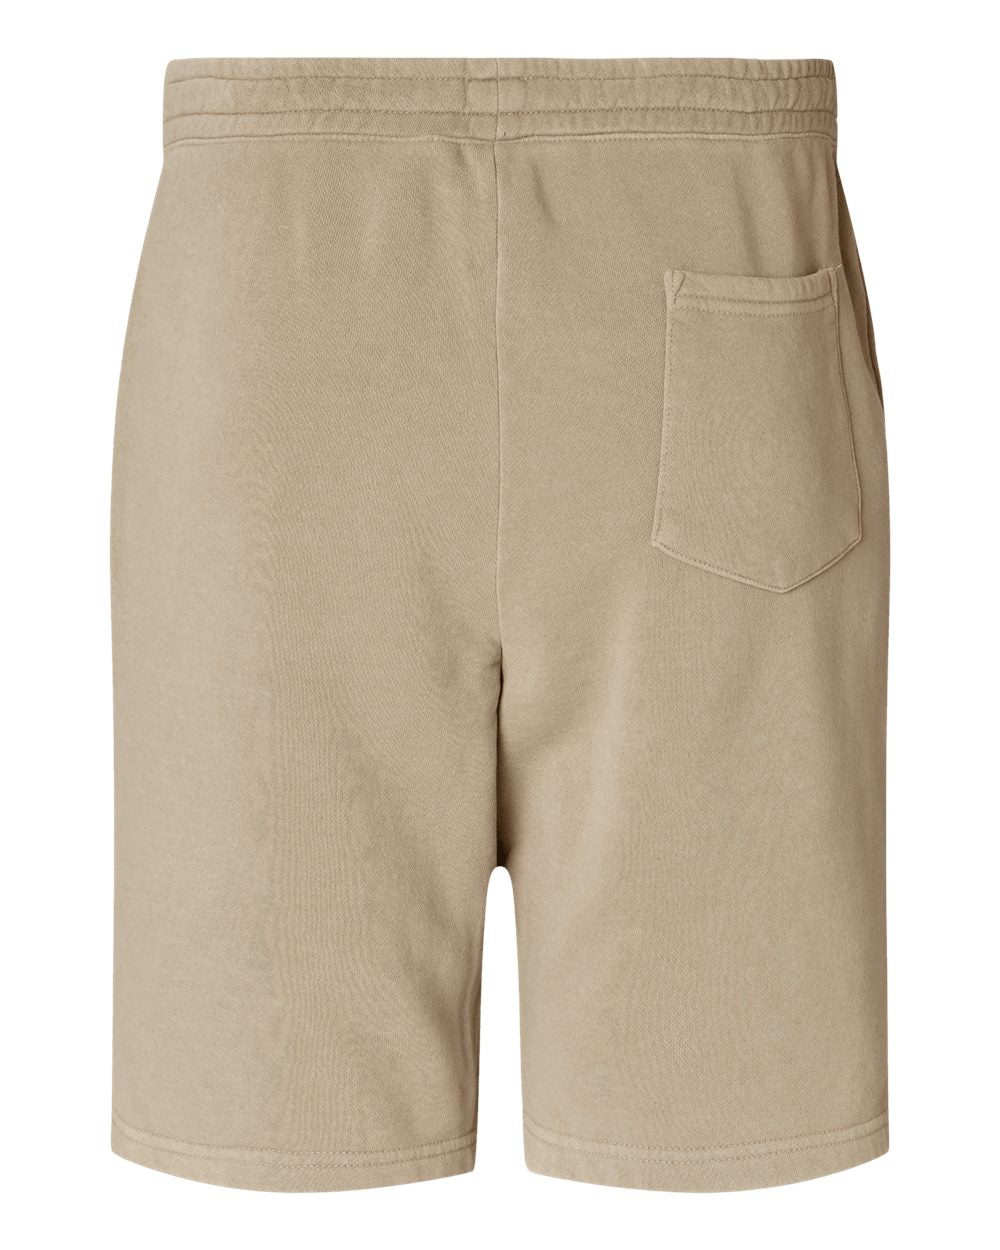 SOULSKY Men's Fleece Shorts (Tan)